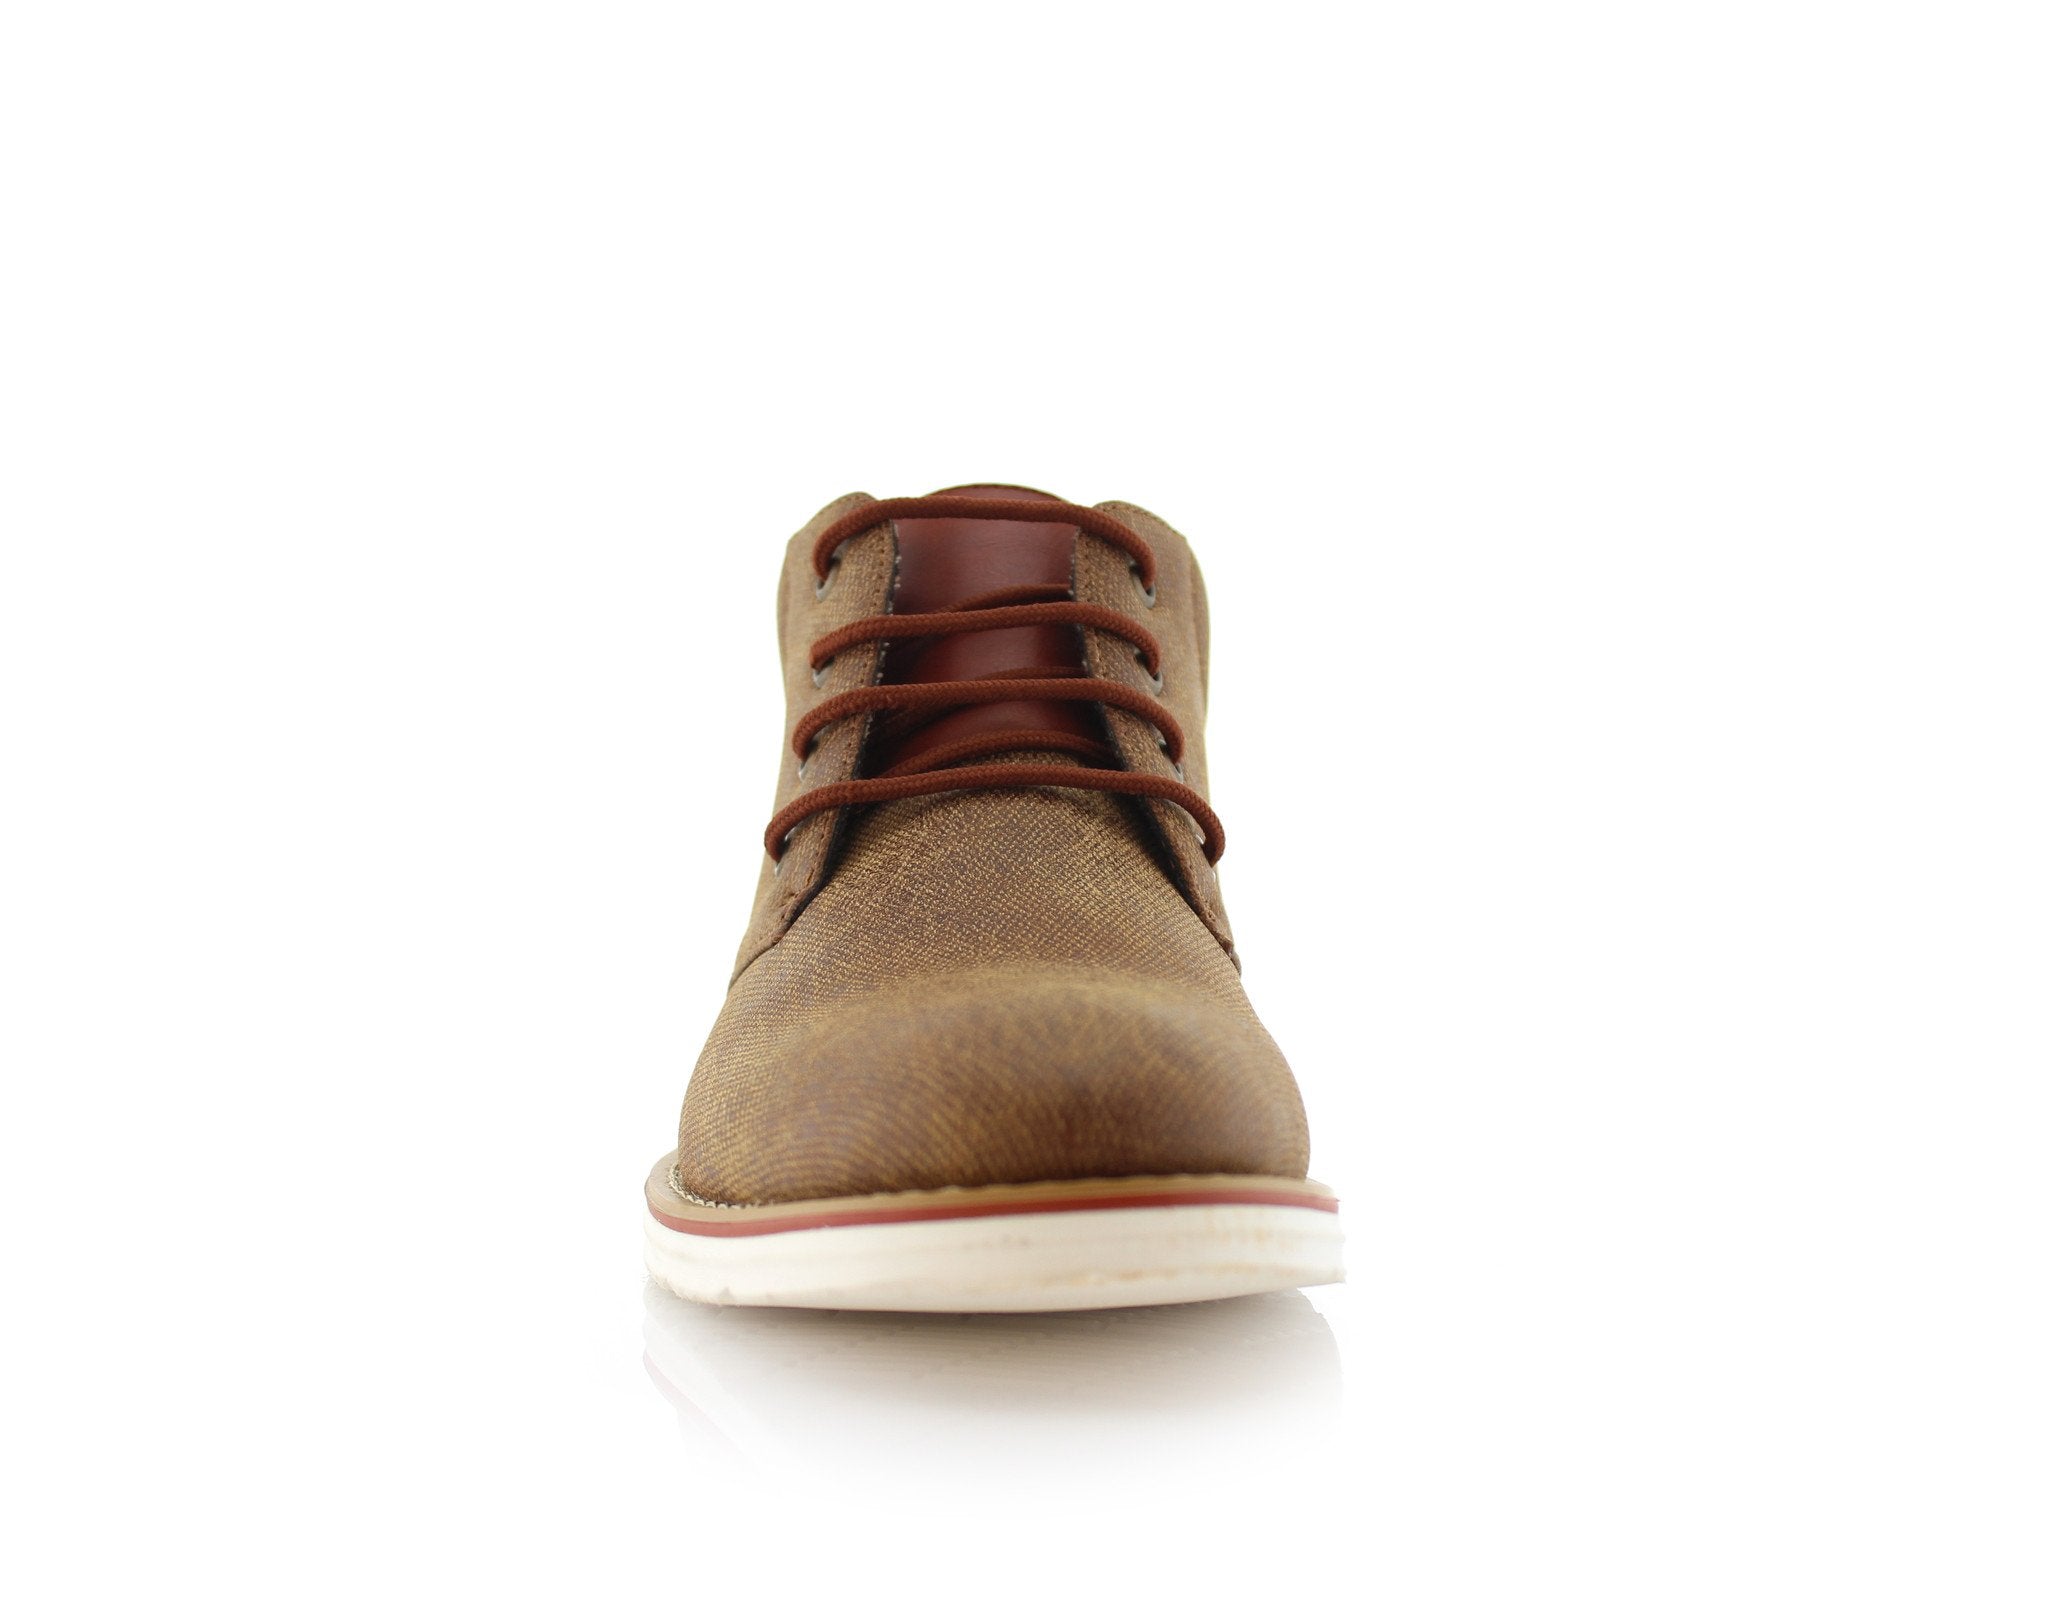 Two-Toned Chukka Sneaker Boots | Owen by Ferro Aldo | Conal Footwear | Front Angle View